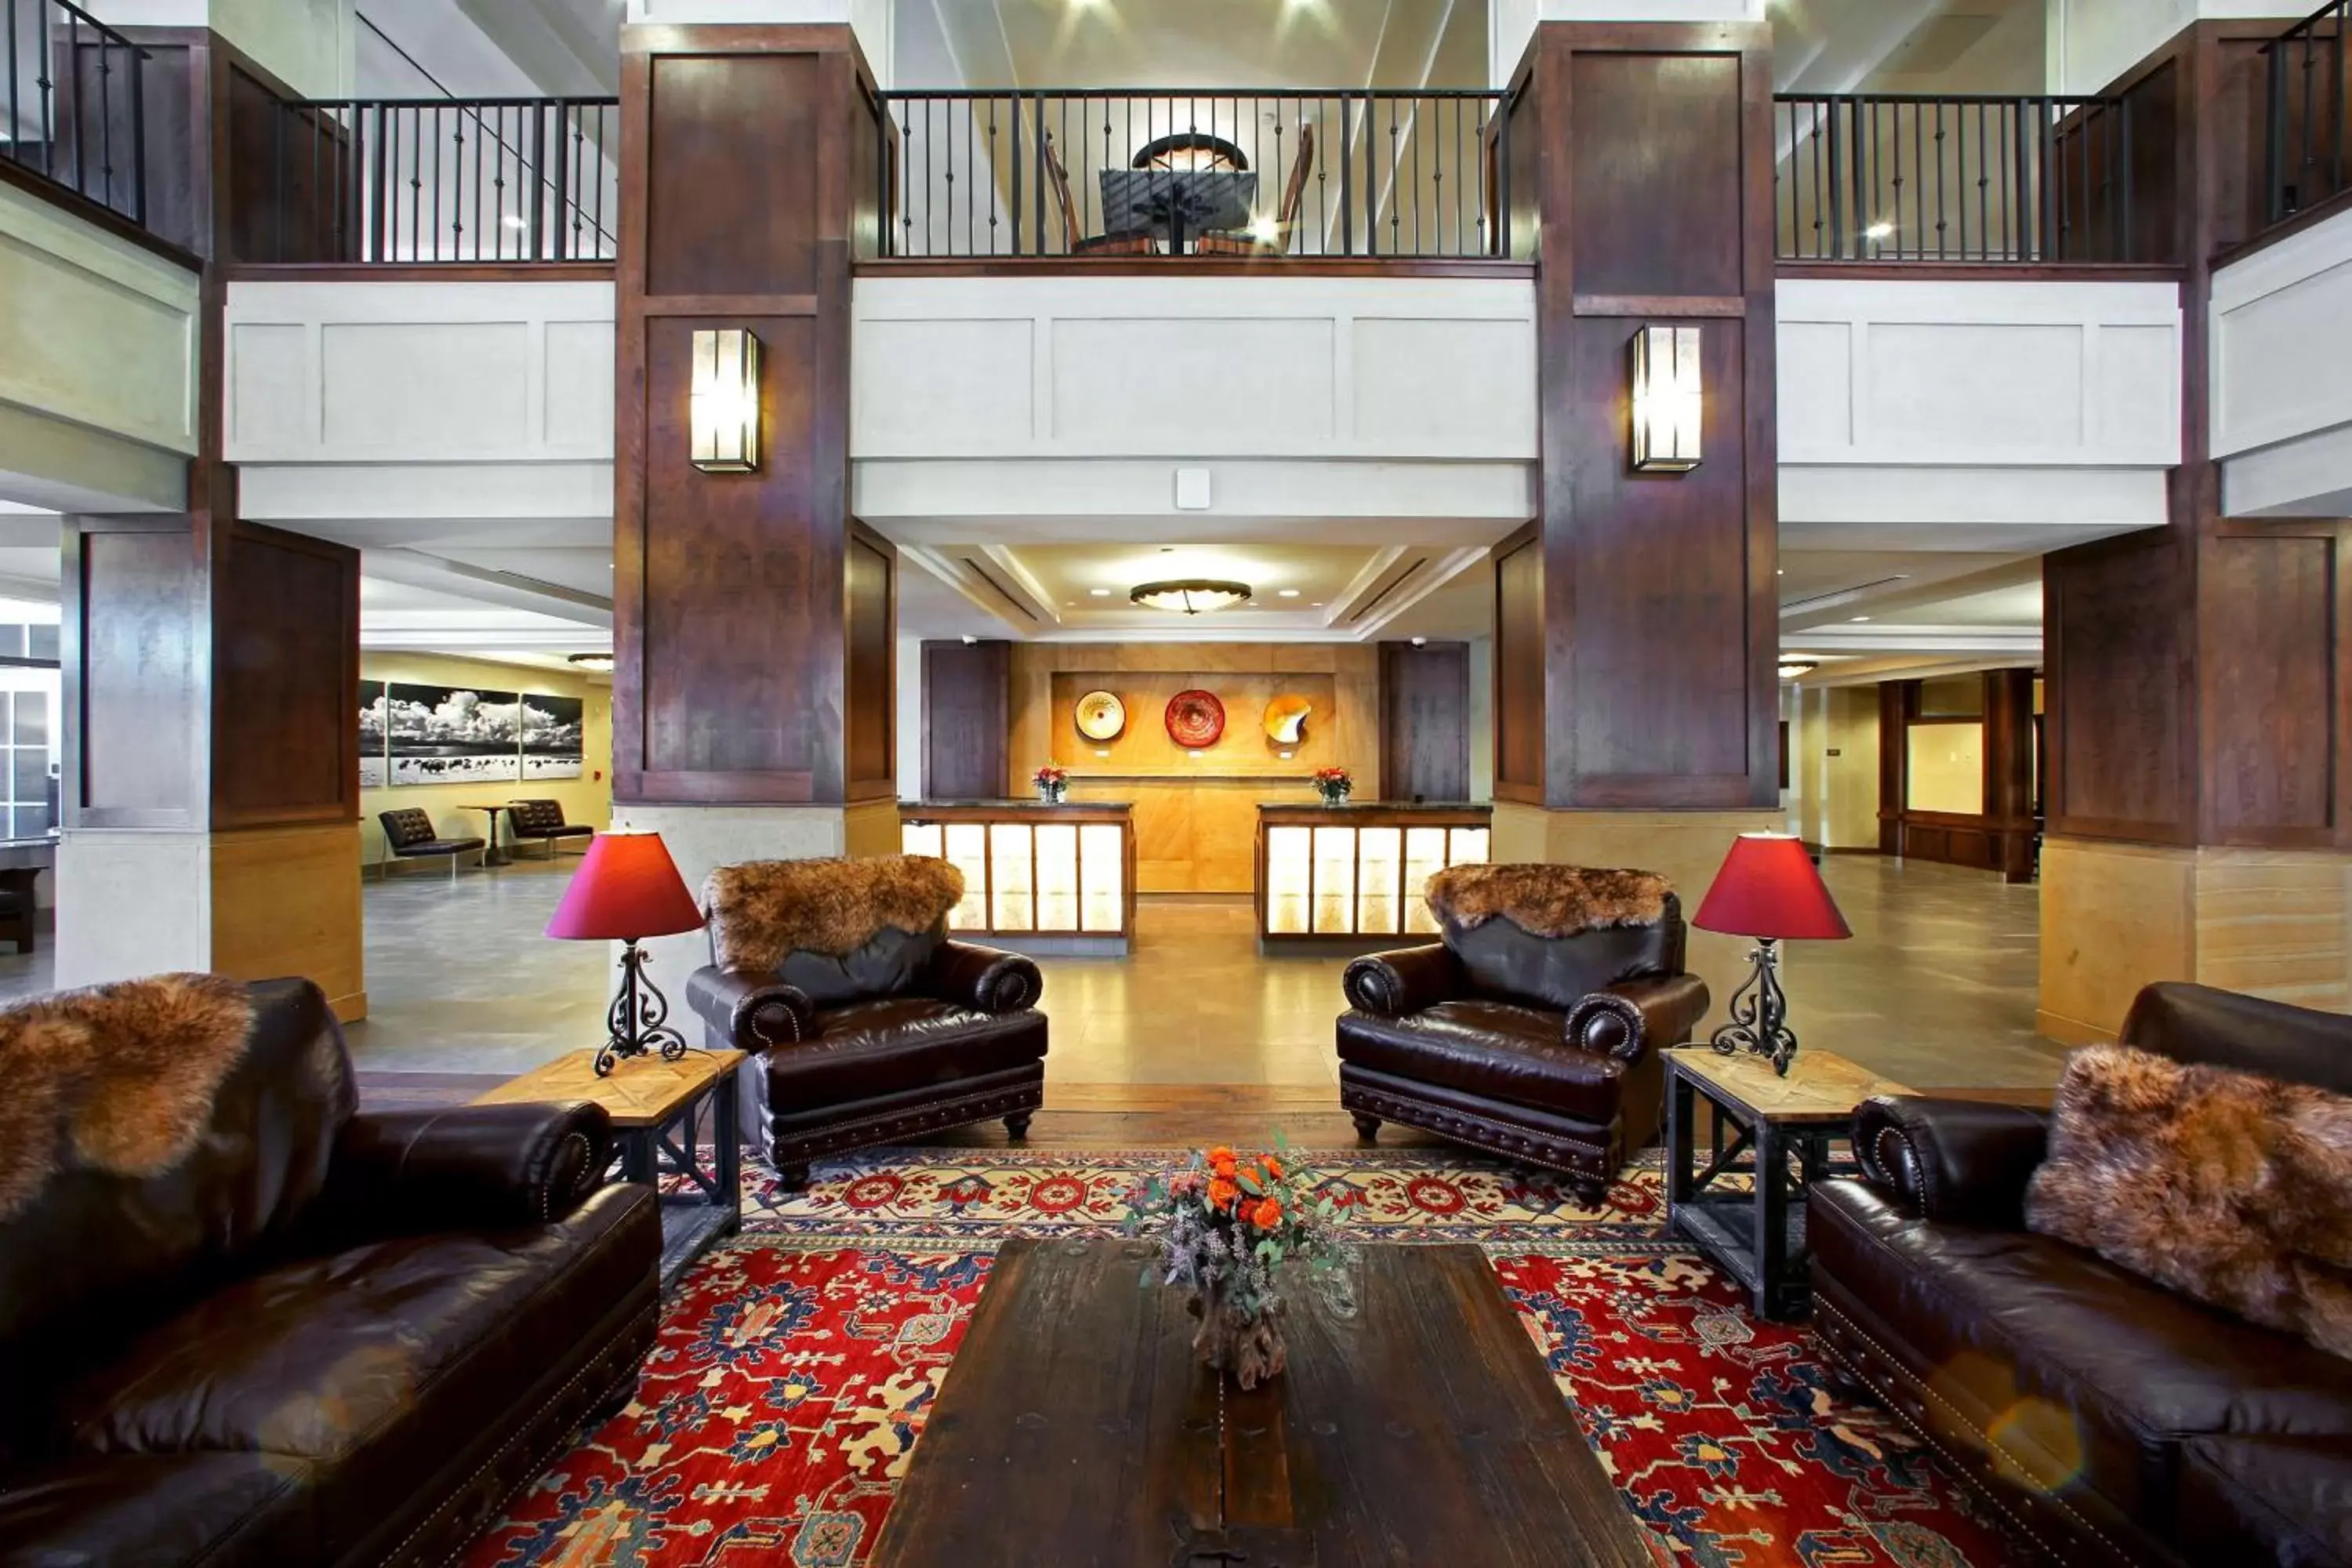 Lobby or reception, Lobby/Reception in Drury Plaza Hotel in Santa Fe